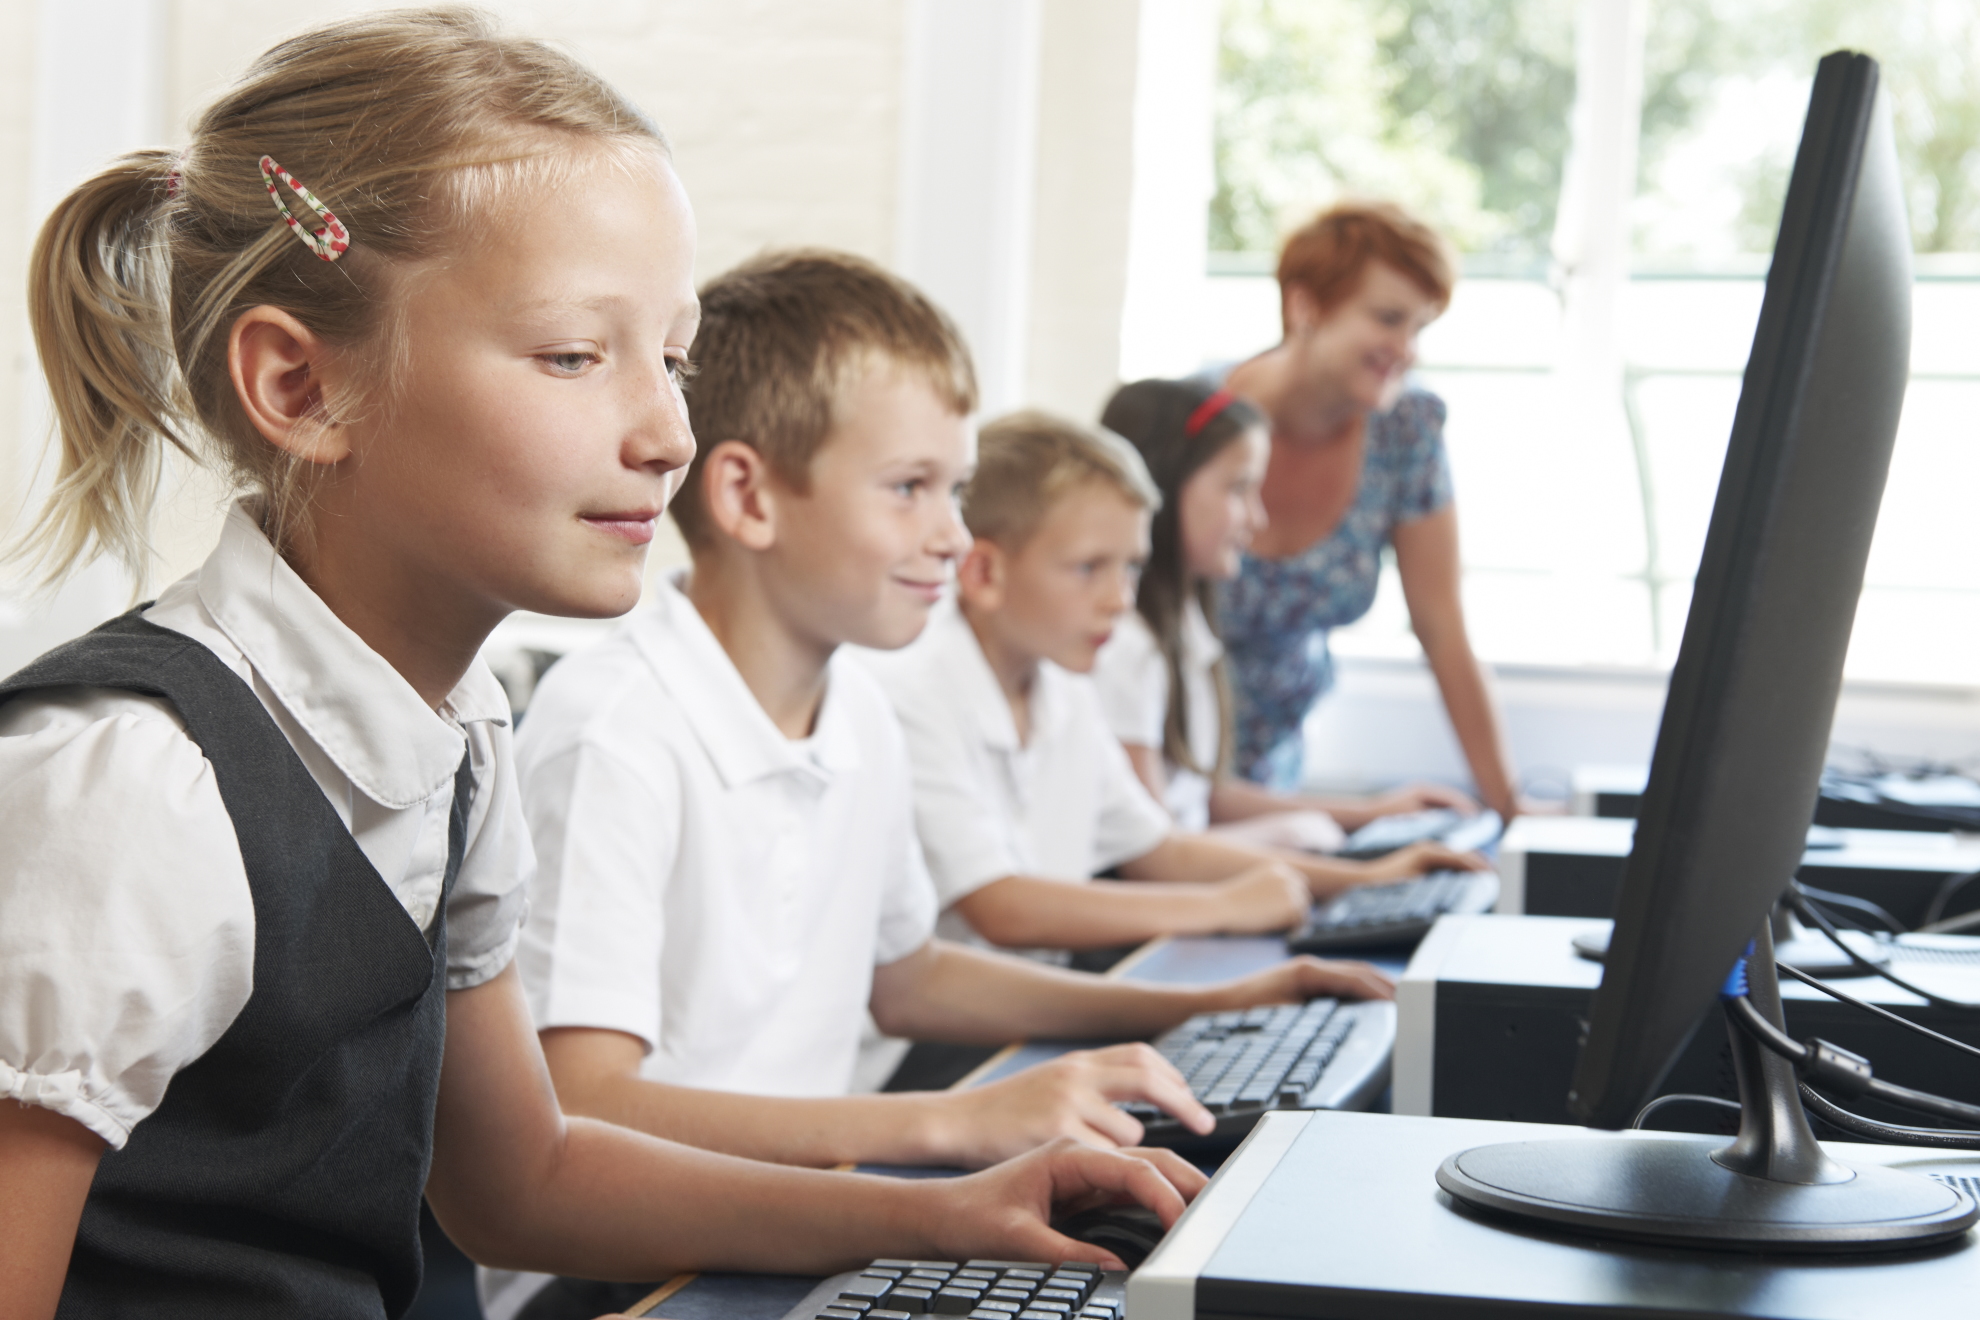 Homeschooling & Digitaler Unterricht - na klar!